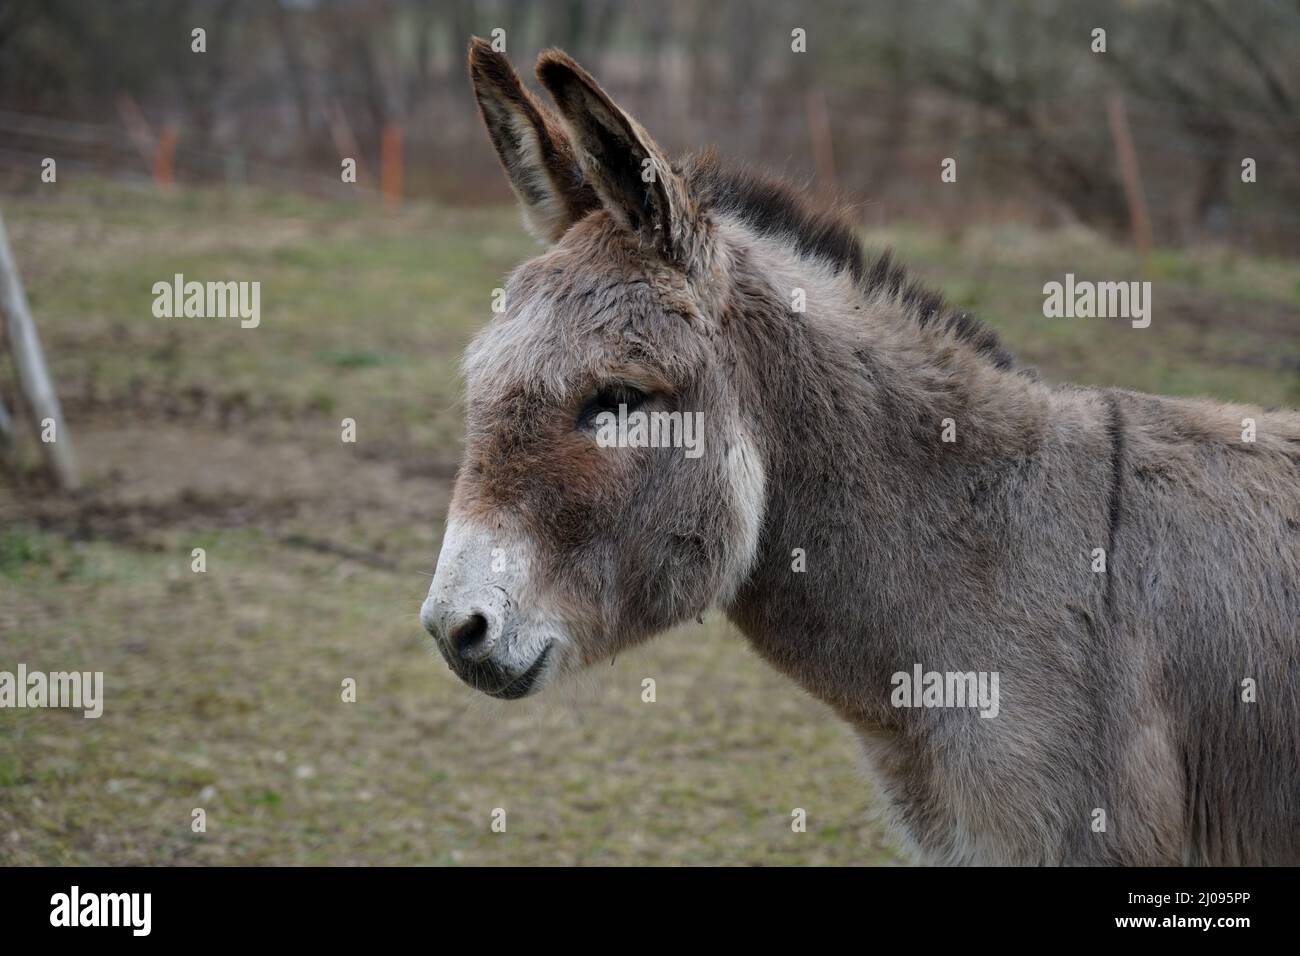 In a small zoo in Saxony a donkey looks curiously at the visitors Zufrieden mit dem Ergebnis? ★ ★ ★ ★ ★ Die PONS Textübersetzung – jetzt neu mit viele Stock Photo